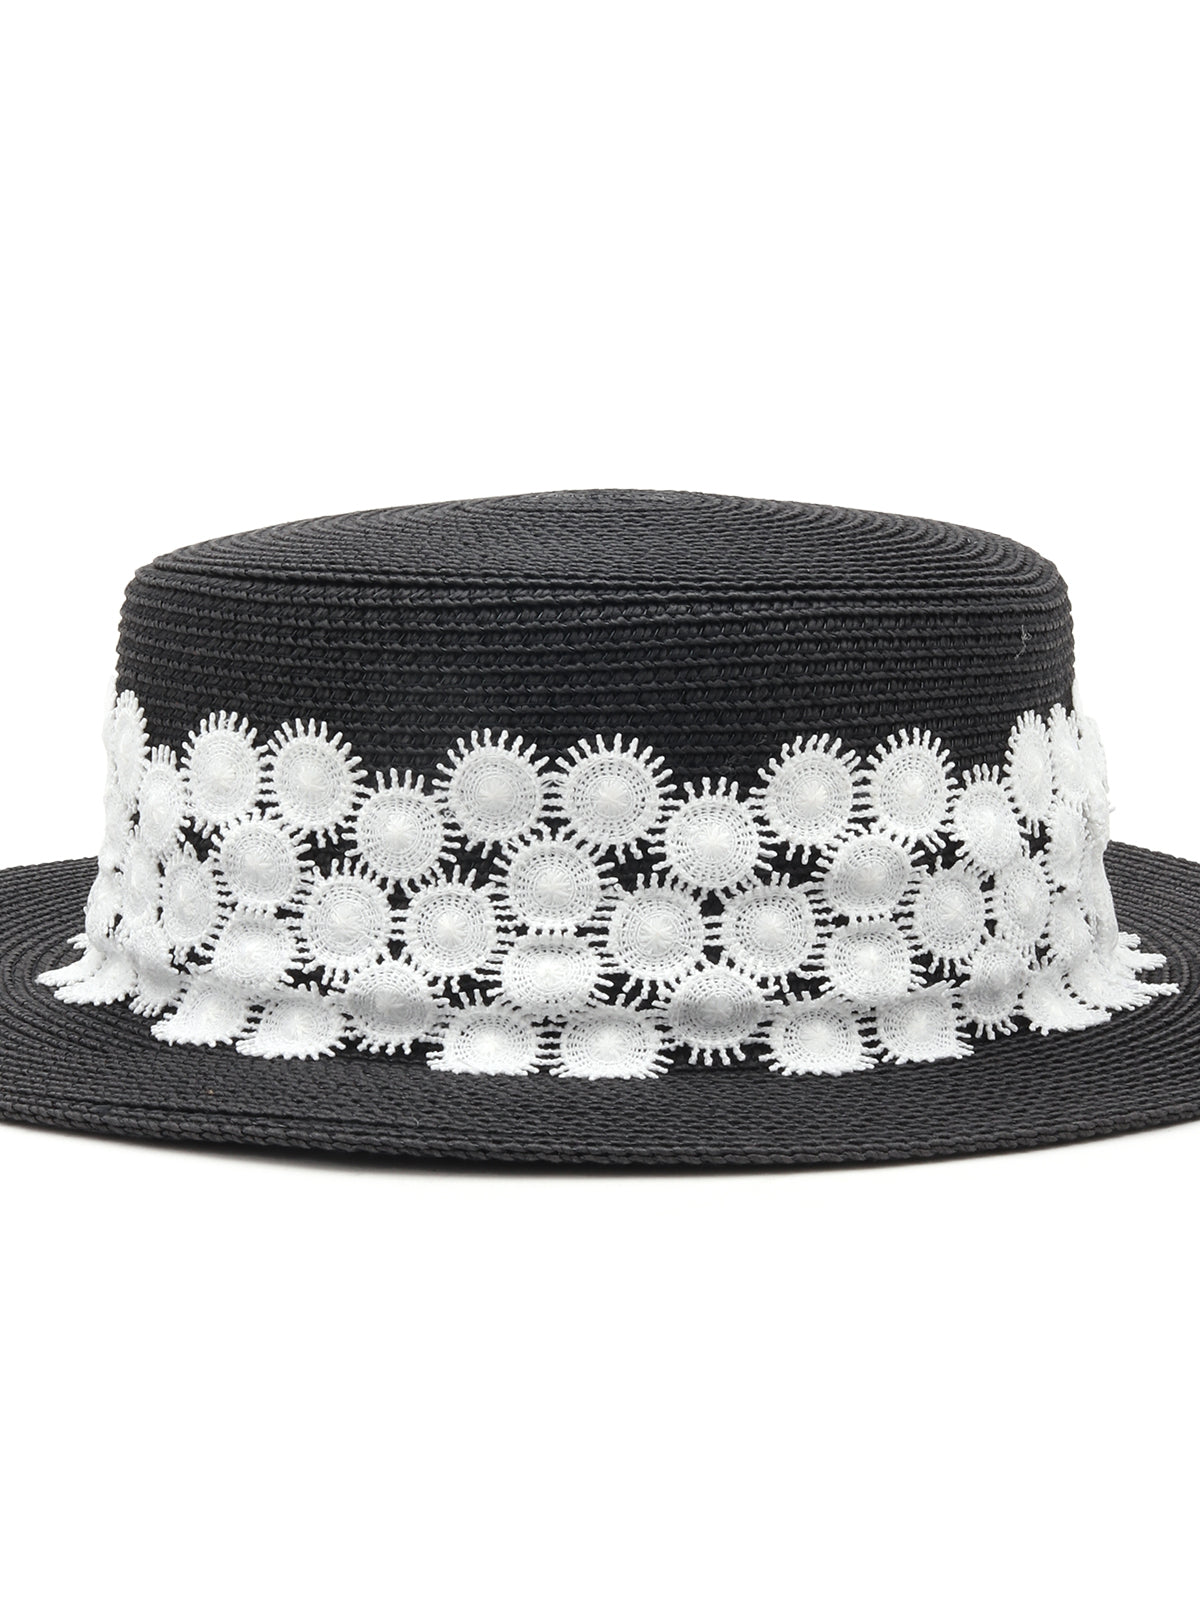 Odette Black and White Embellished Straw Boater Hat for Women